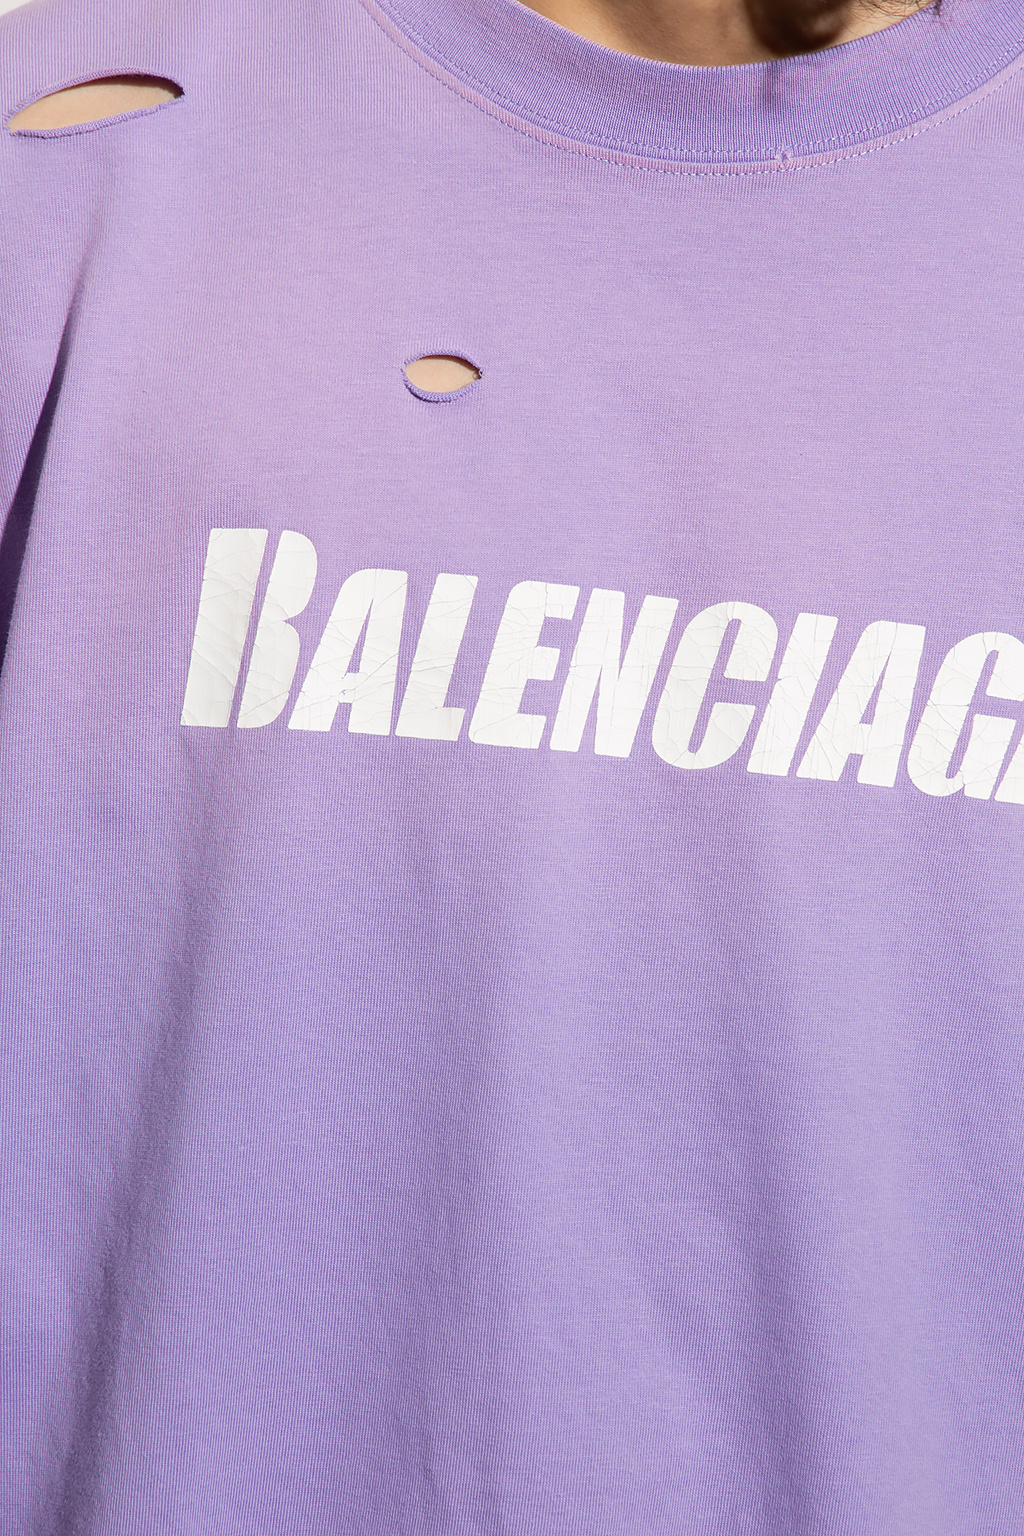 Balenciaga  Magazine Print All Over Shirt  BNWT M  eBay